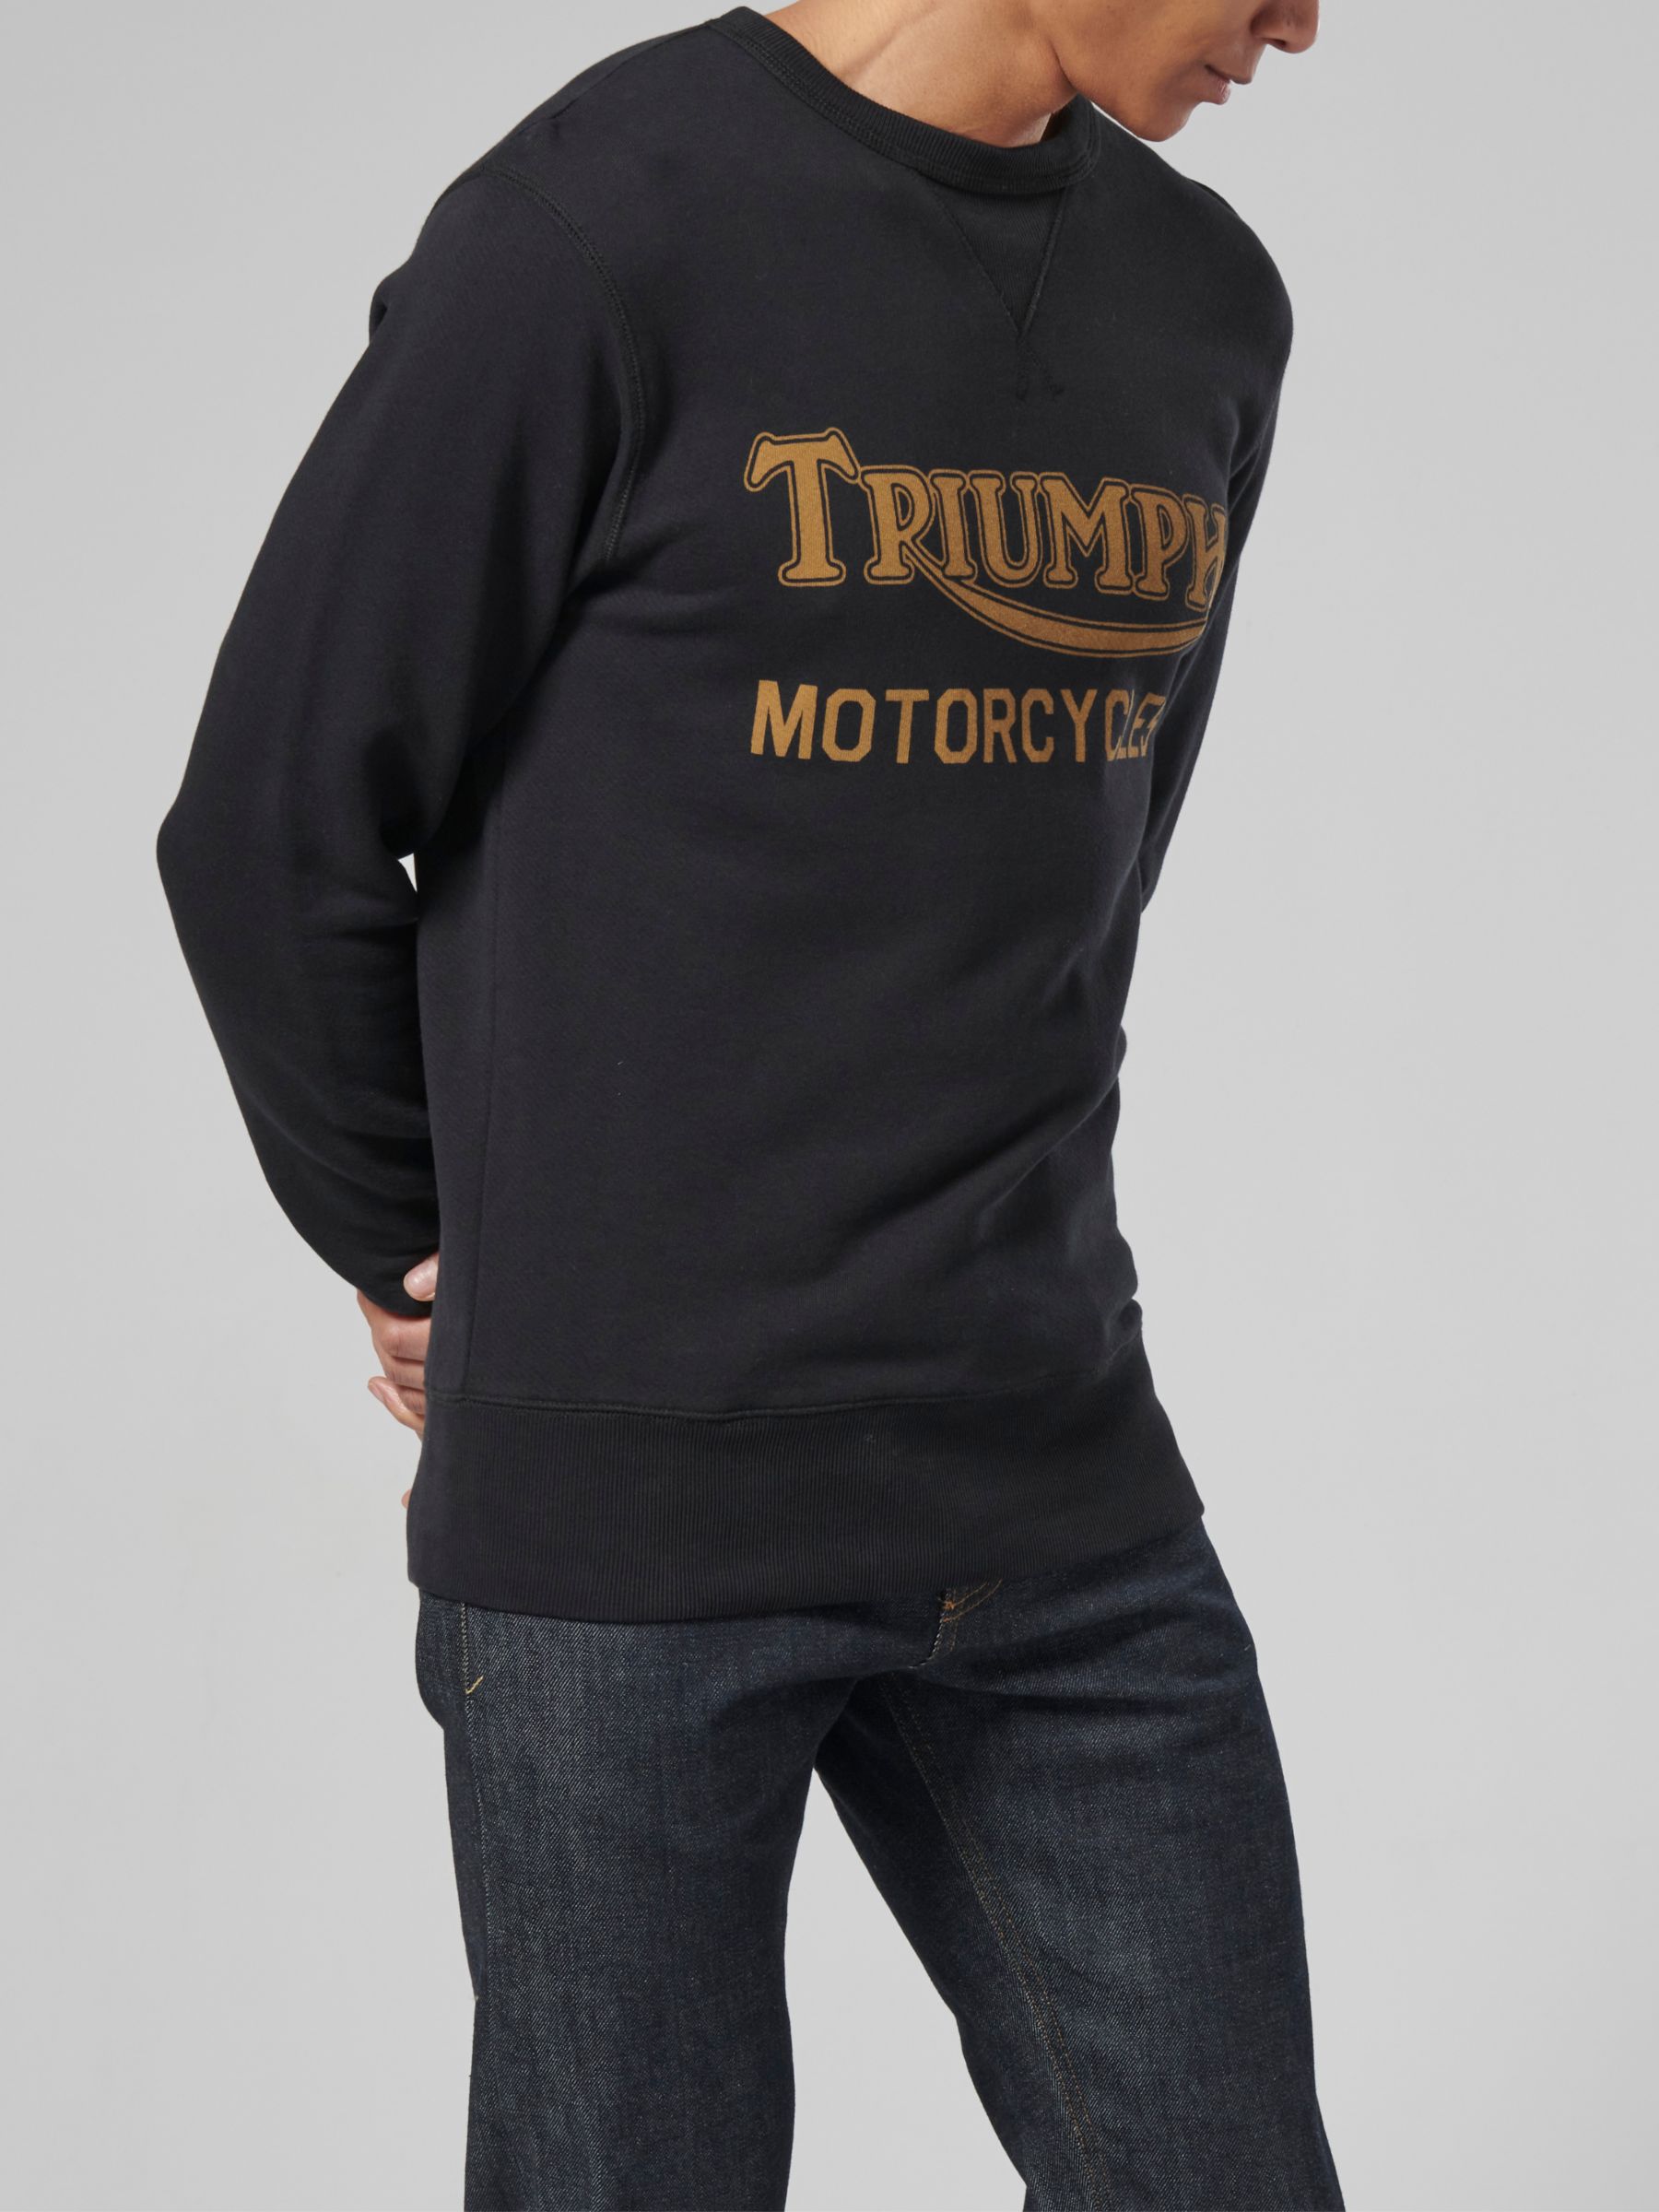 Triumph Motorcycles Radial Sweatshirt, Black, S